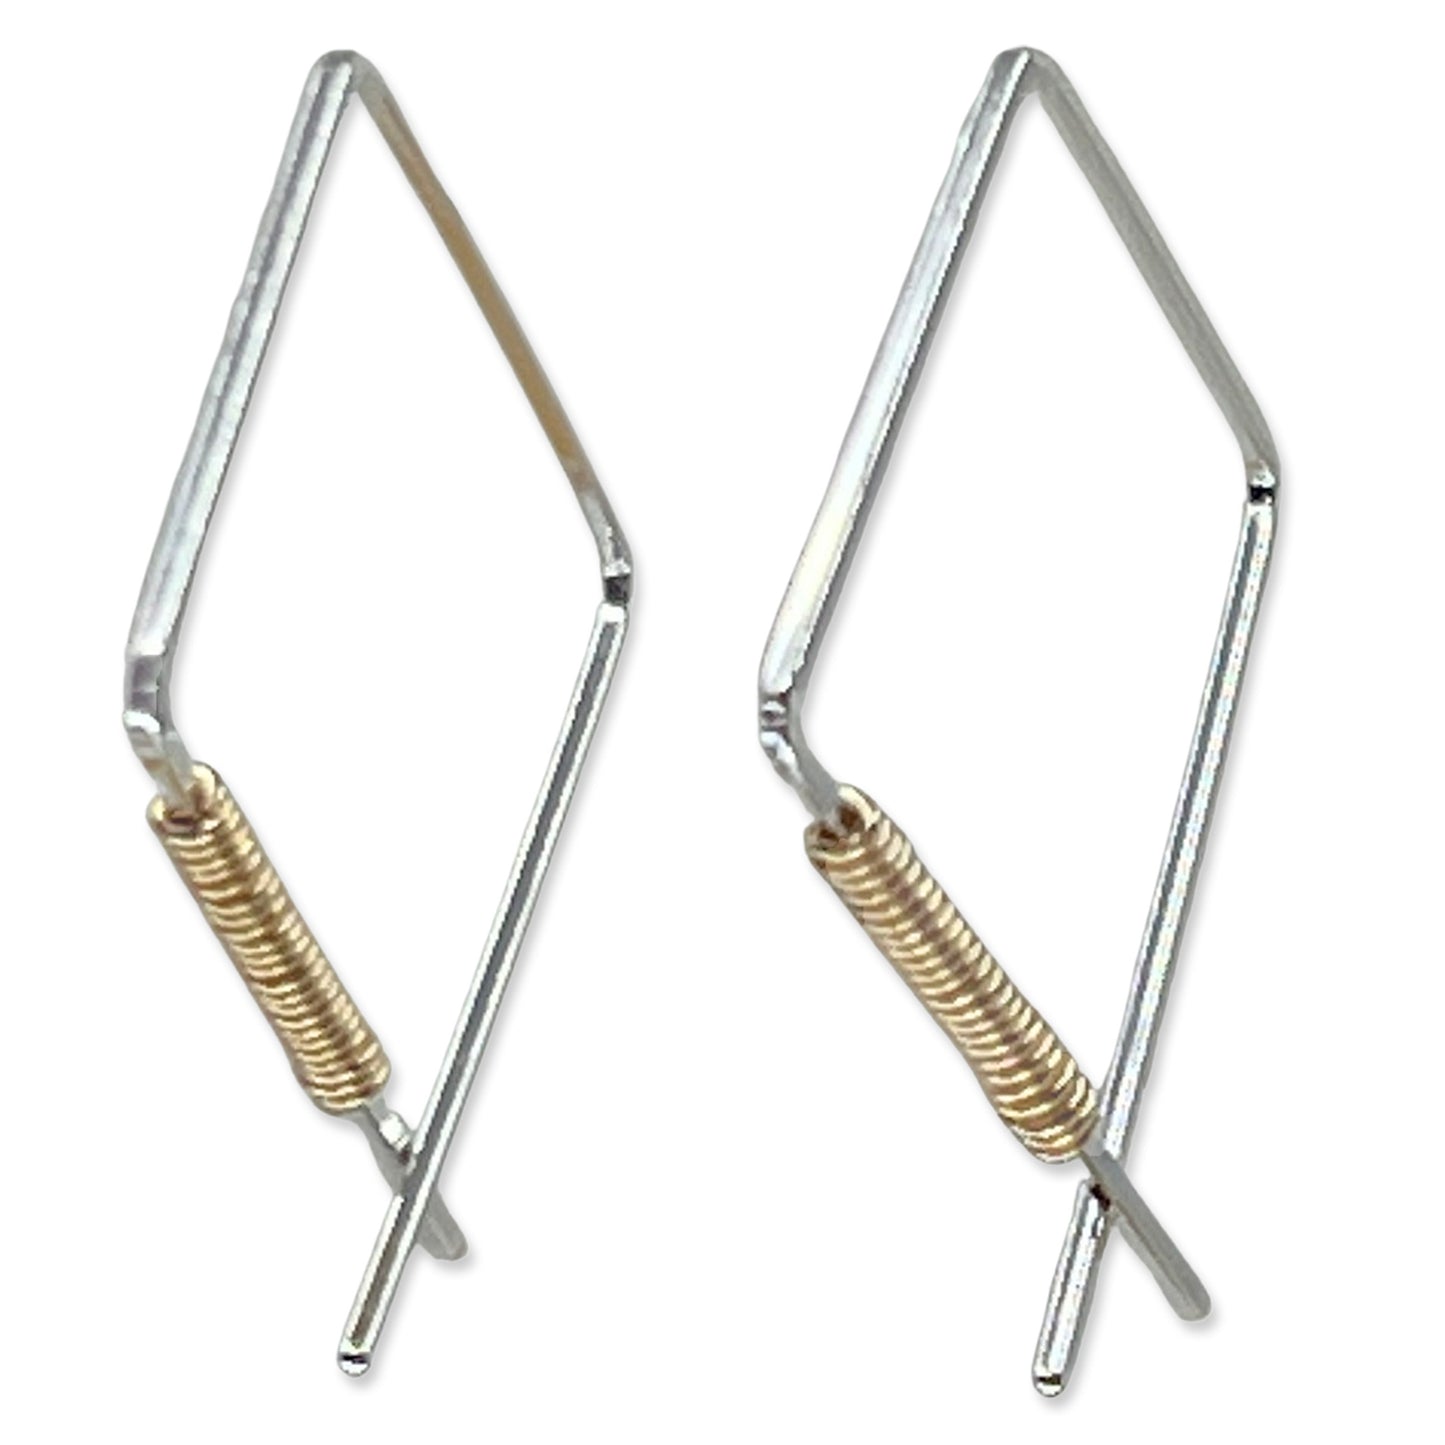 Handmade Square Hoop Earrings - Sterling Silver, 14k Gold Filled, or Mixed Metal Design